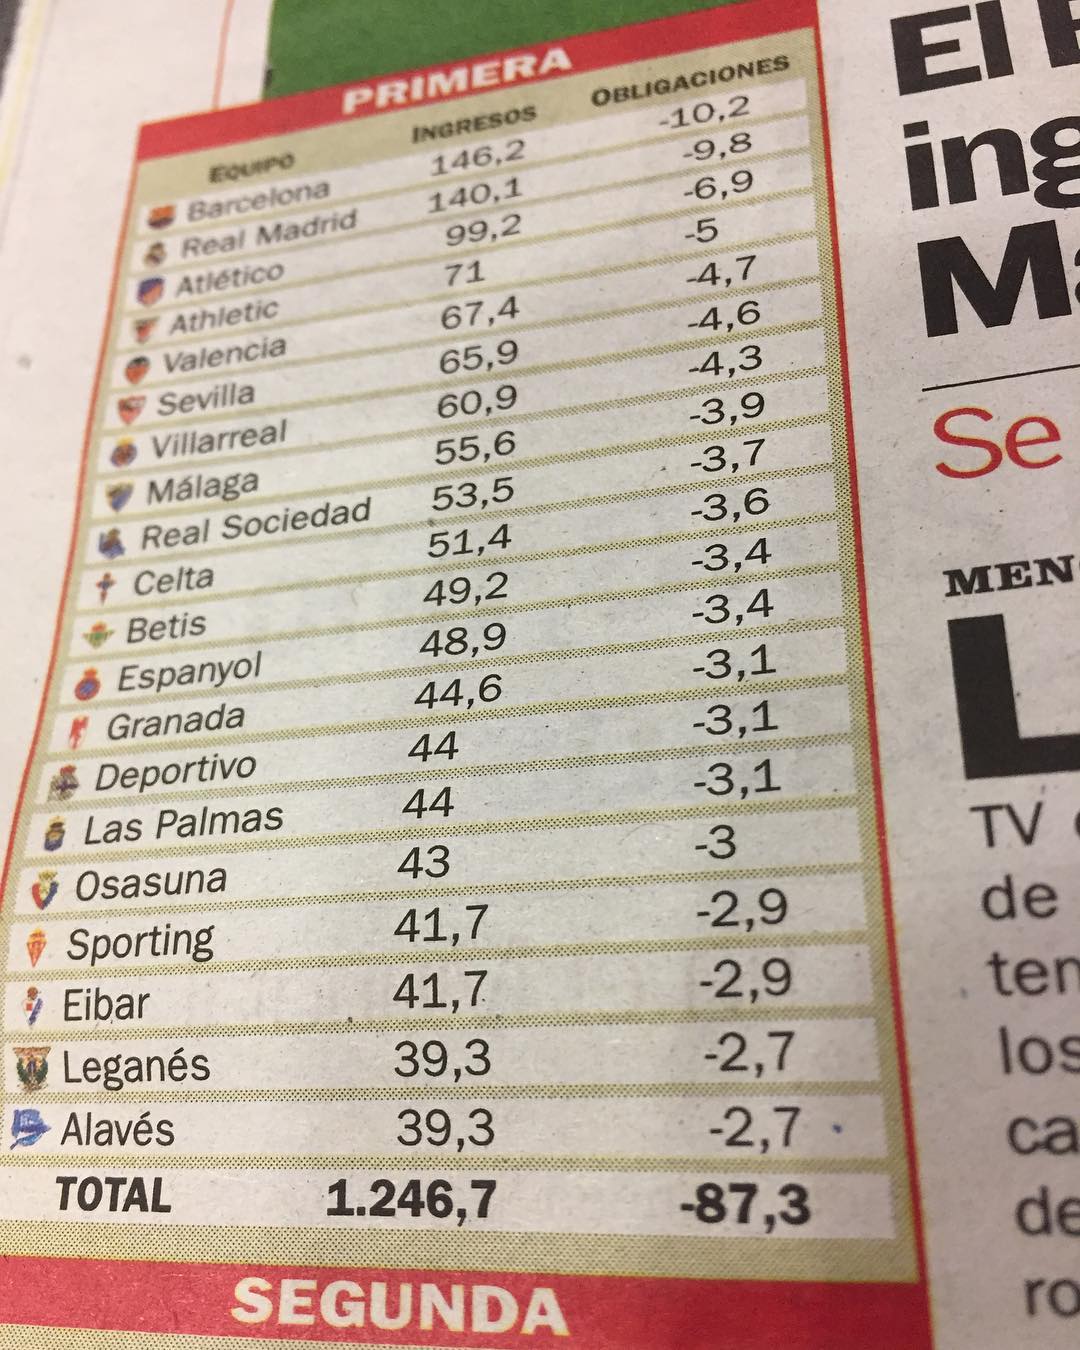 FC Barcelona won 146.2 million euros of television coverage last season. First …